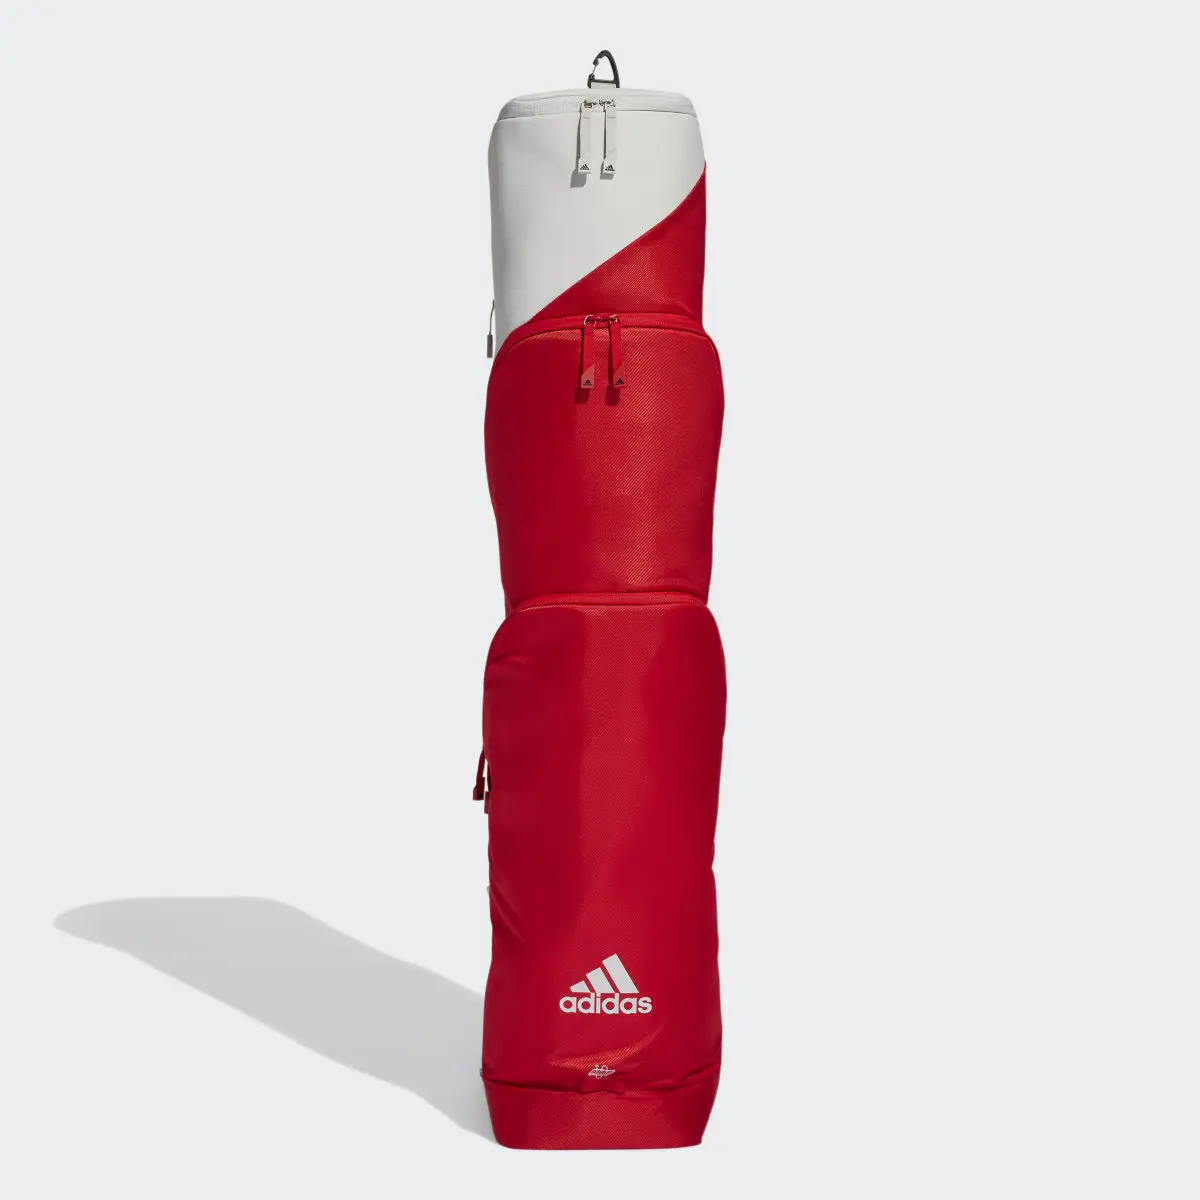 Adidas VS.6 Red/Grey Hockey Stick Bag. 2